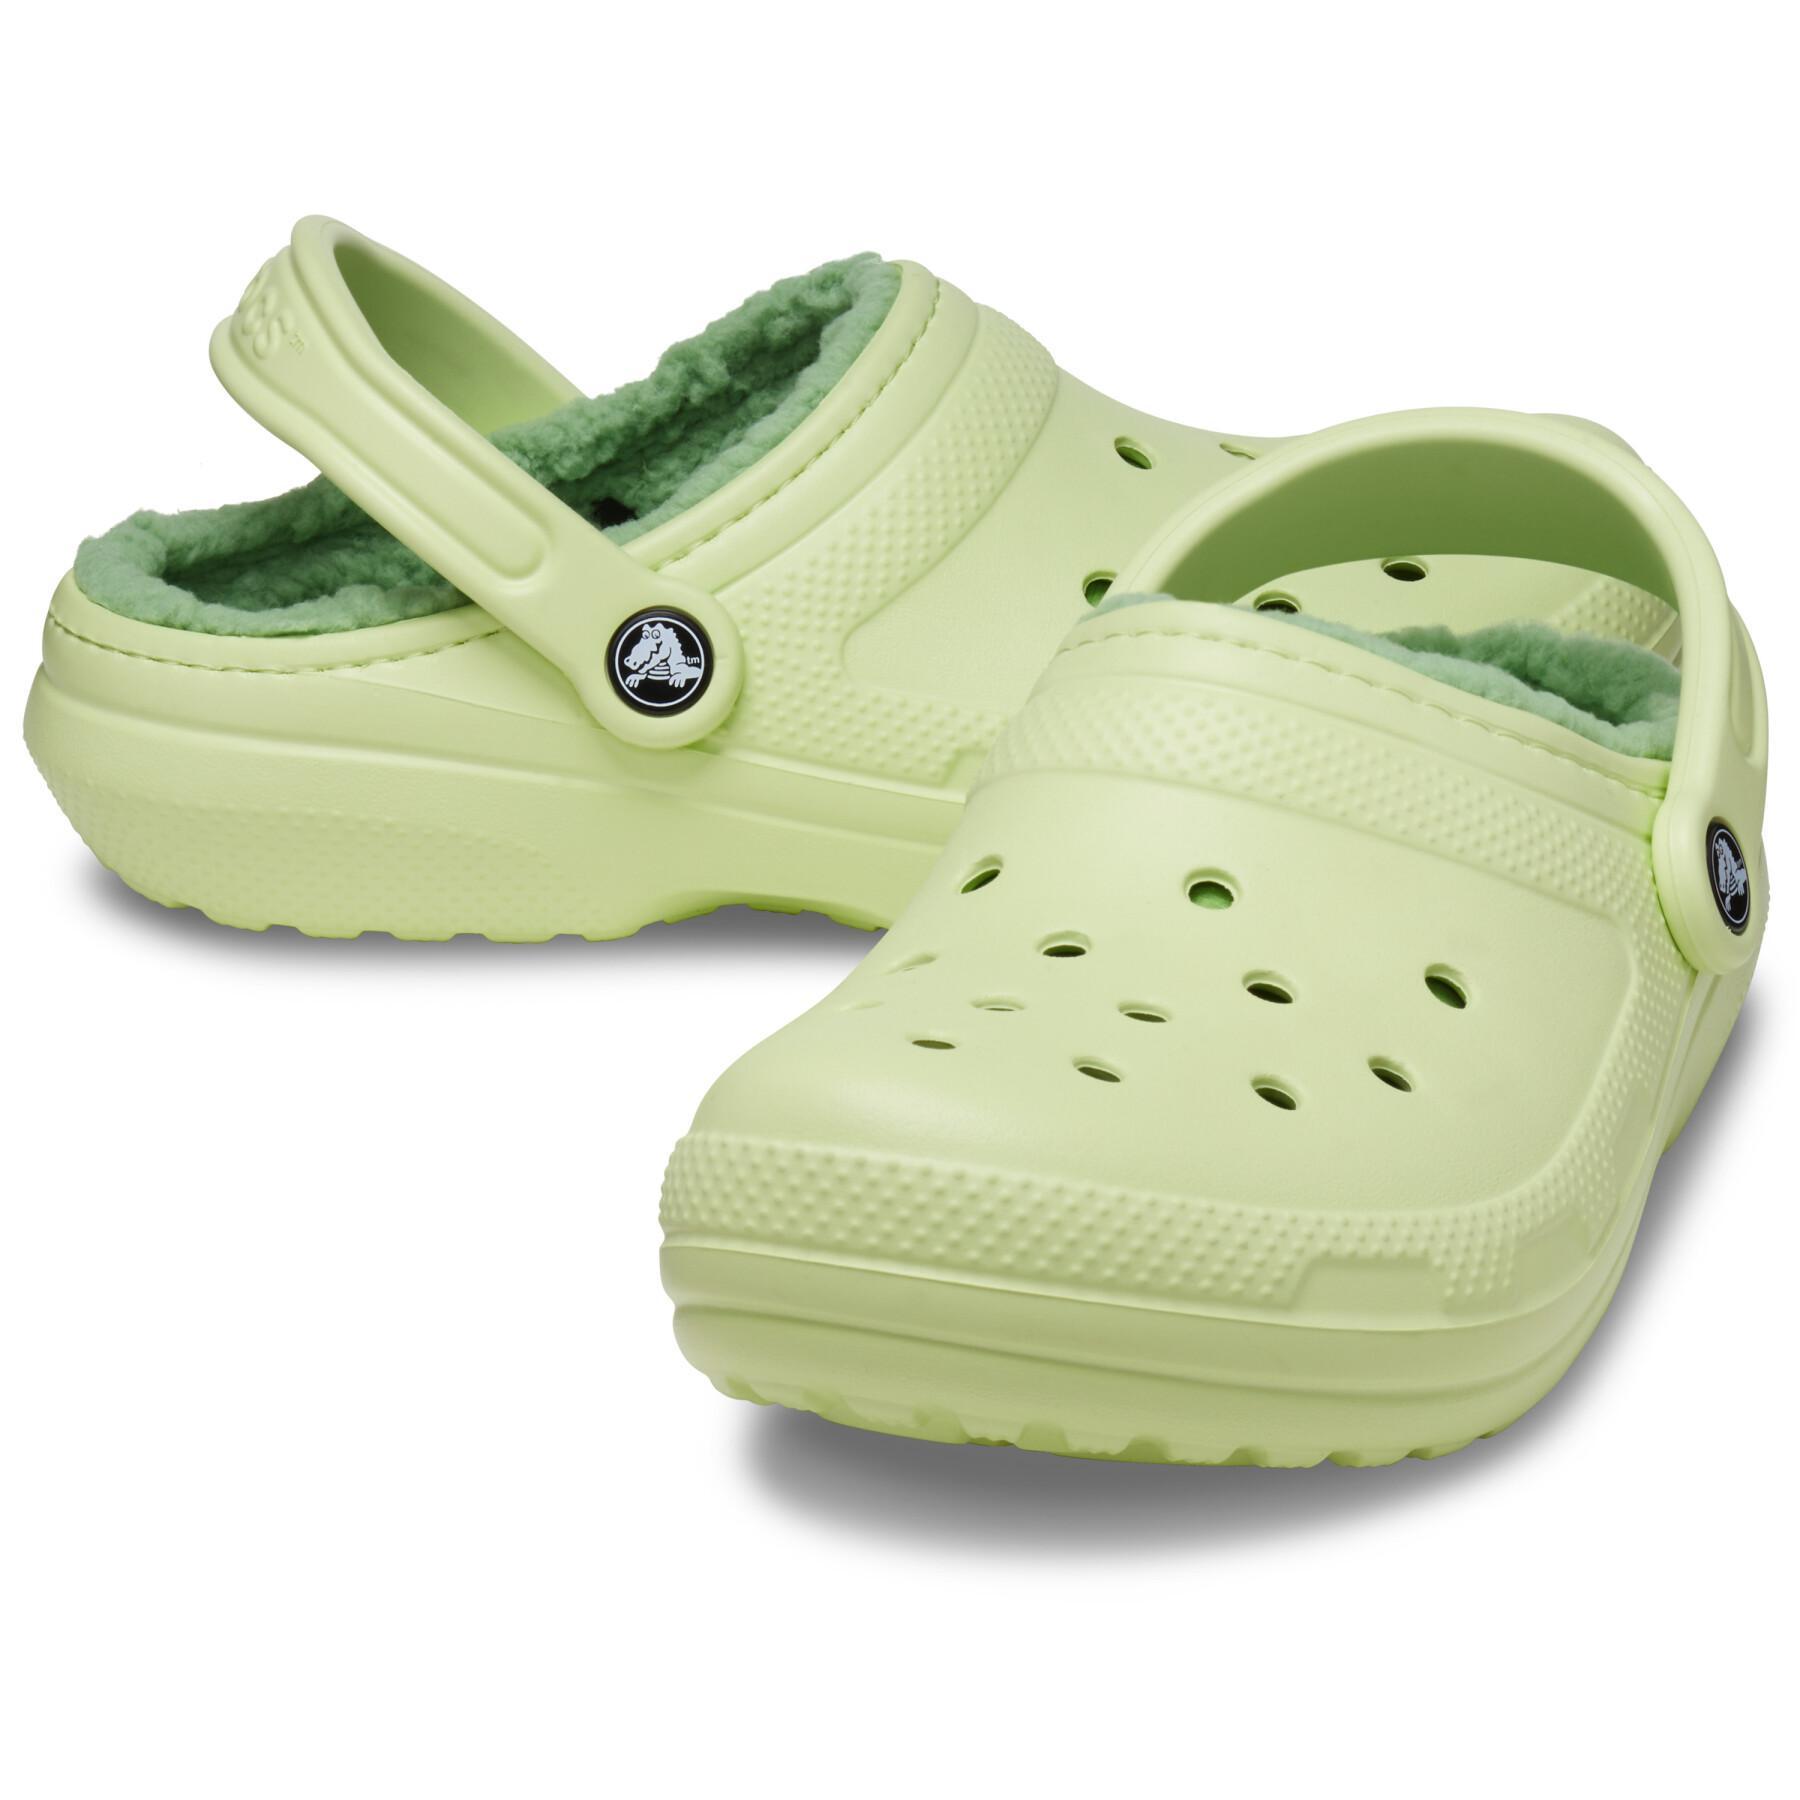 Tamancos Crocs Classic Fuzz-Lined